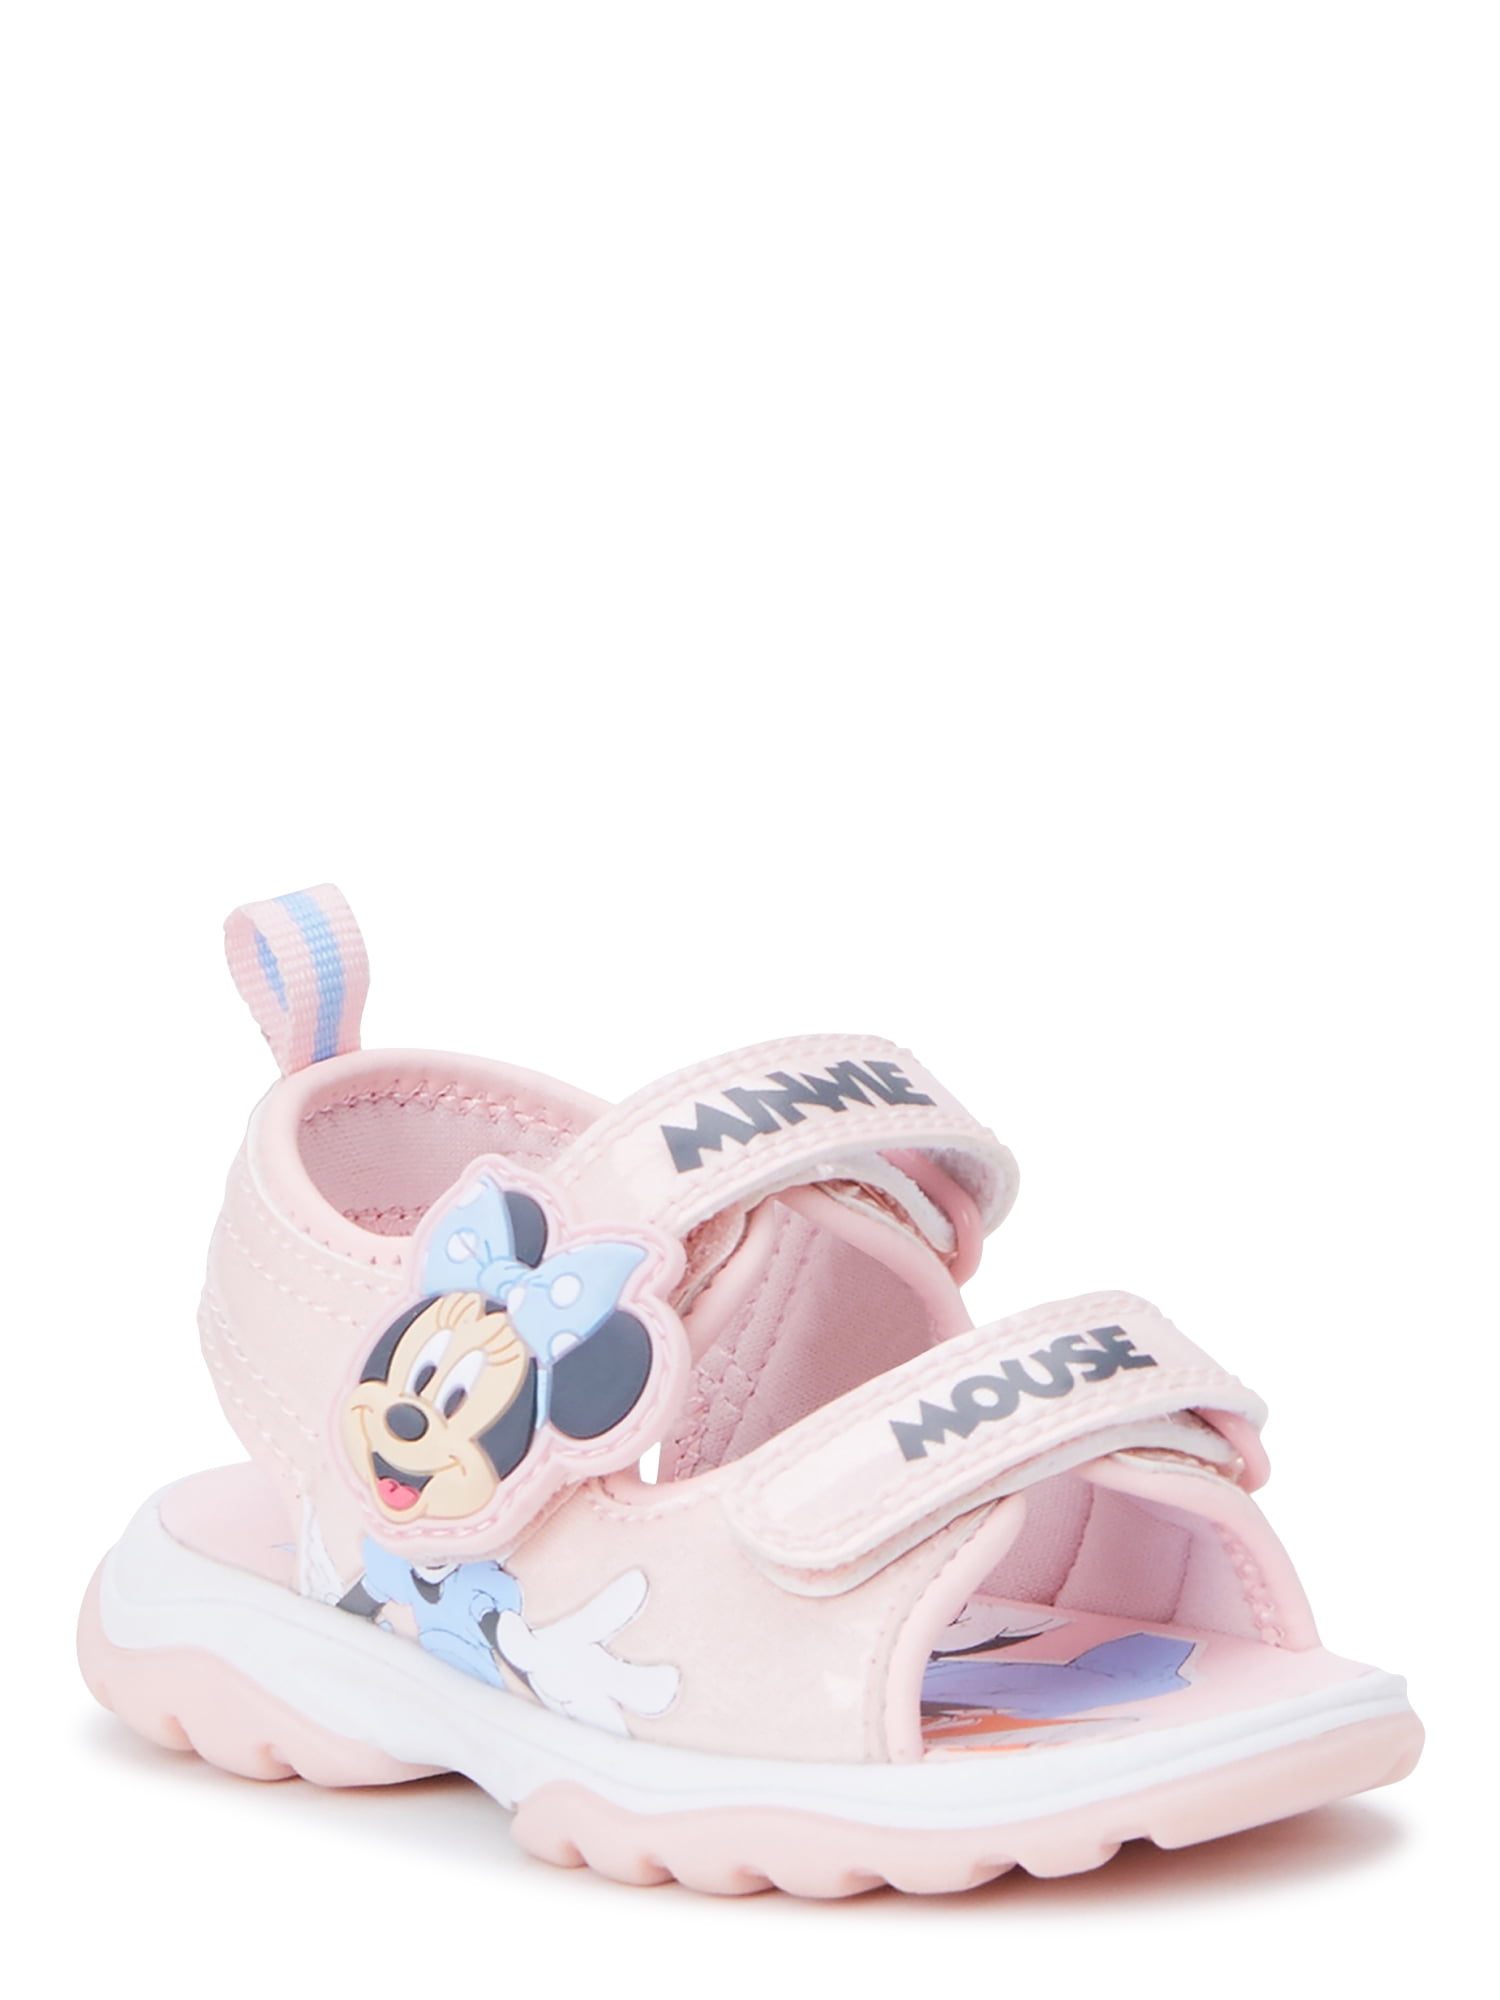 Disney Minnie Mouse Baby Girls Sport Sandals, Sizes 2-6